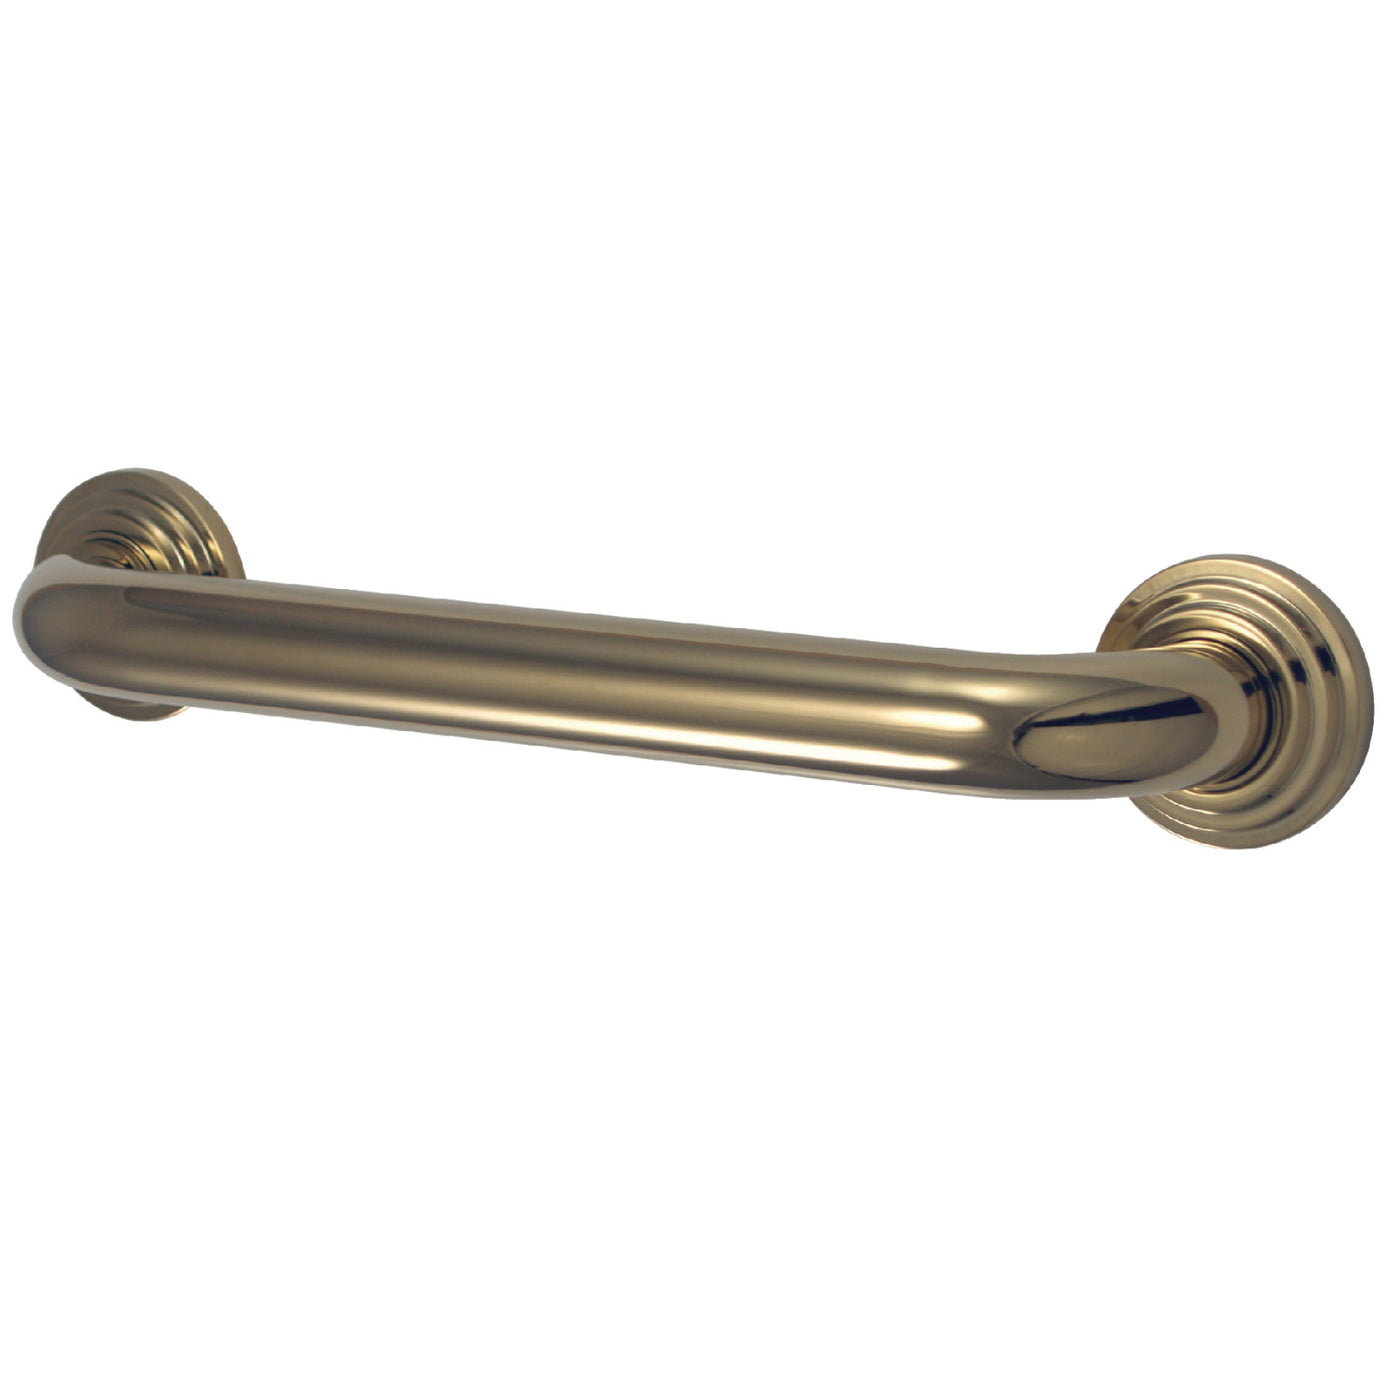 Elements of Design EDR214302 30-Inch x 1-1/4-Inch O.D Grab Bar, Polished Brass